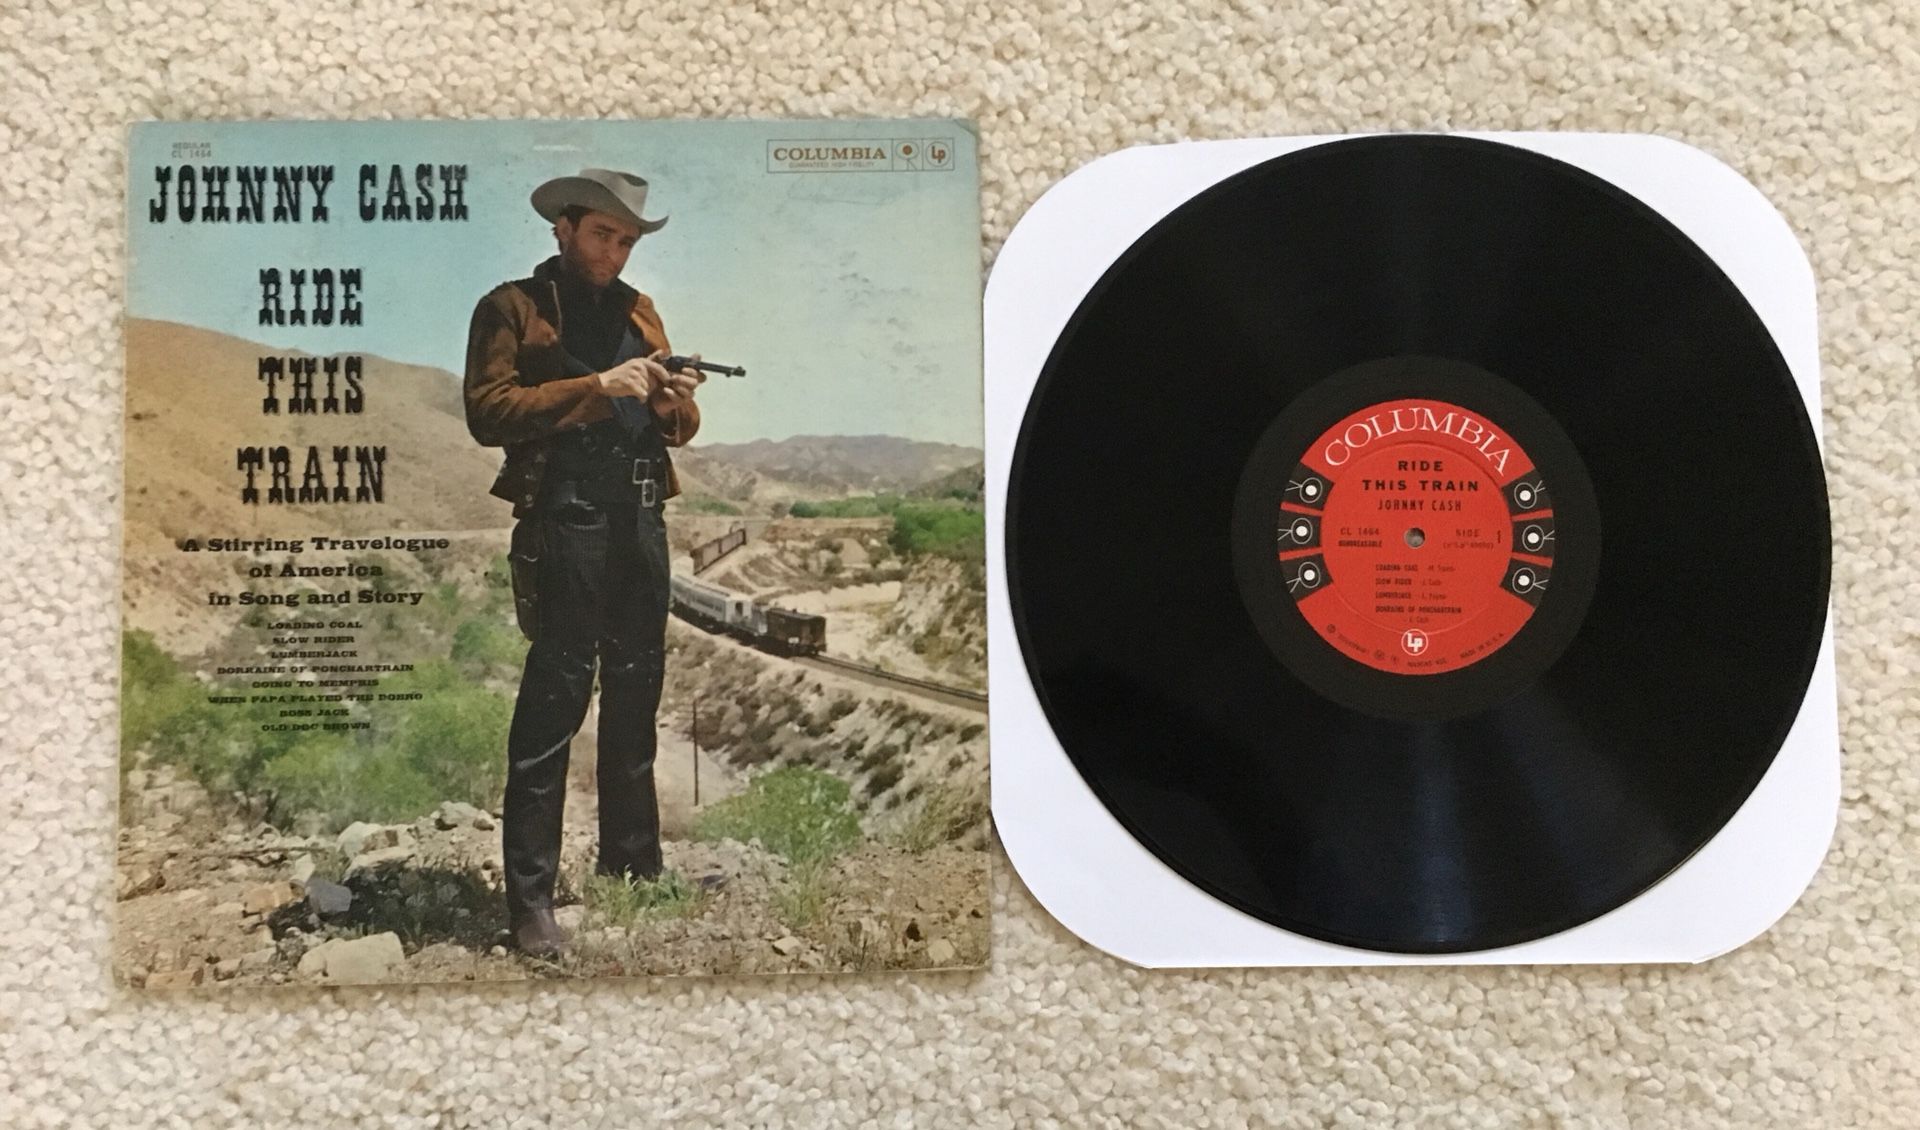 Johnny Cash “Ride This Train” vinyl lp 1960 Columbia Records Original Mono Pressing very nice collectible copy Country